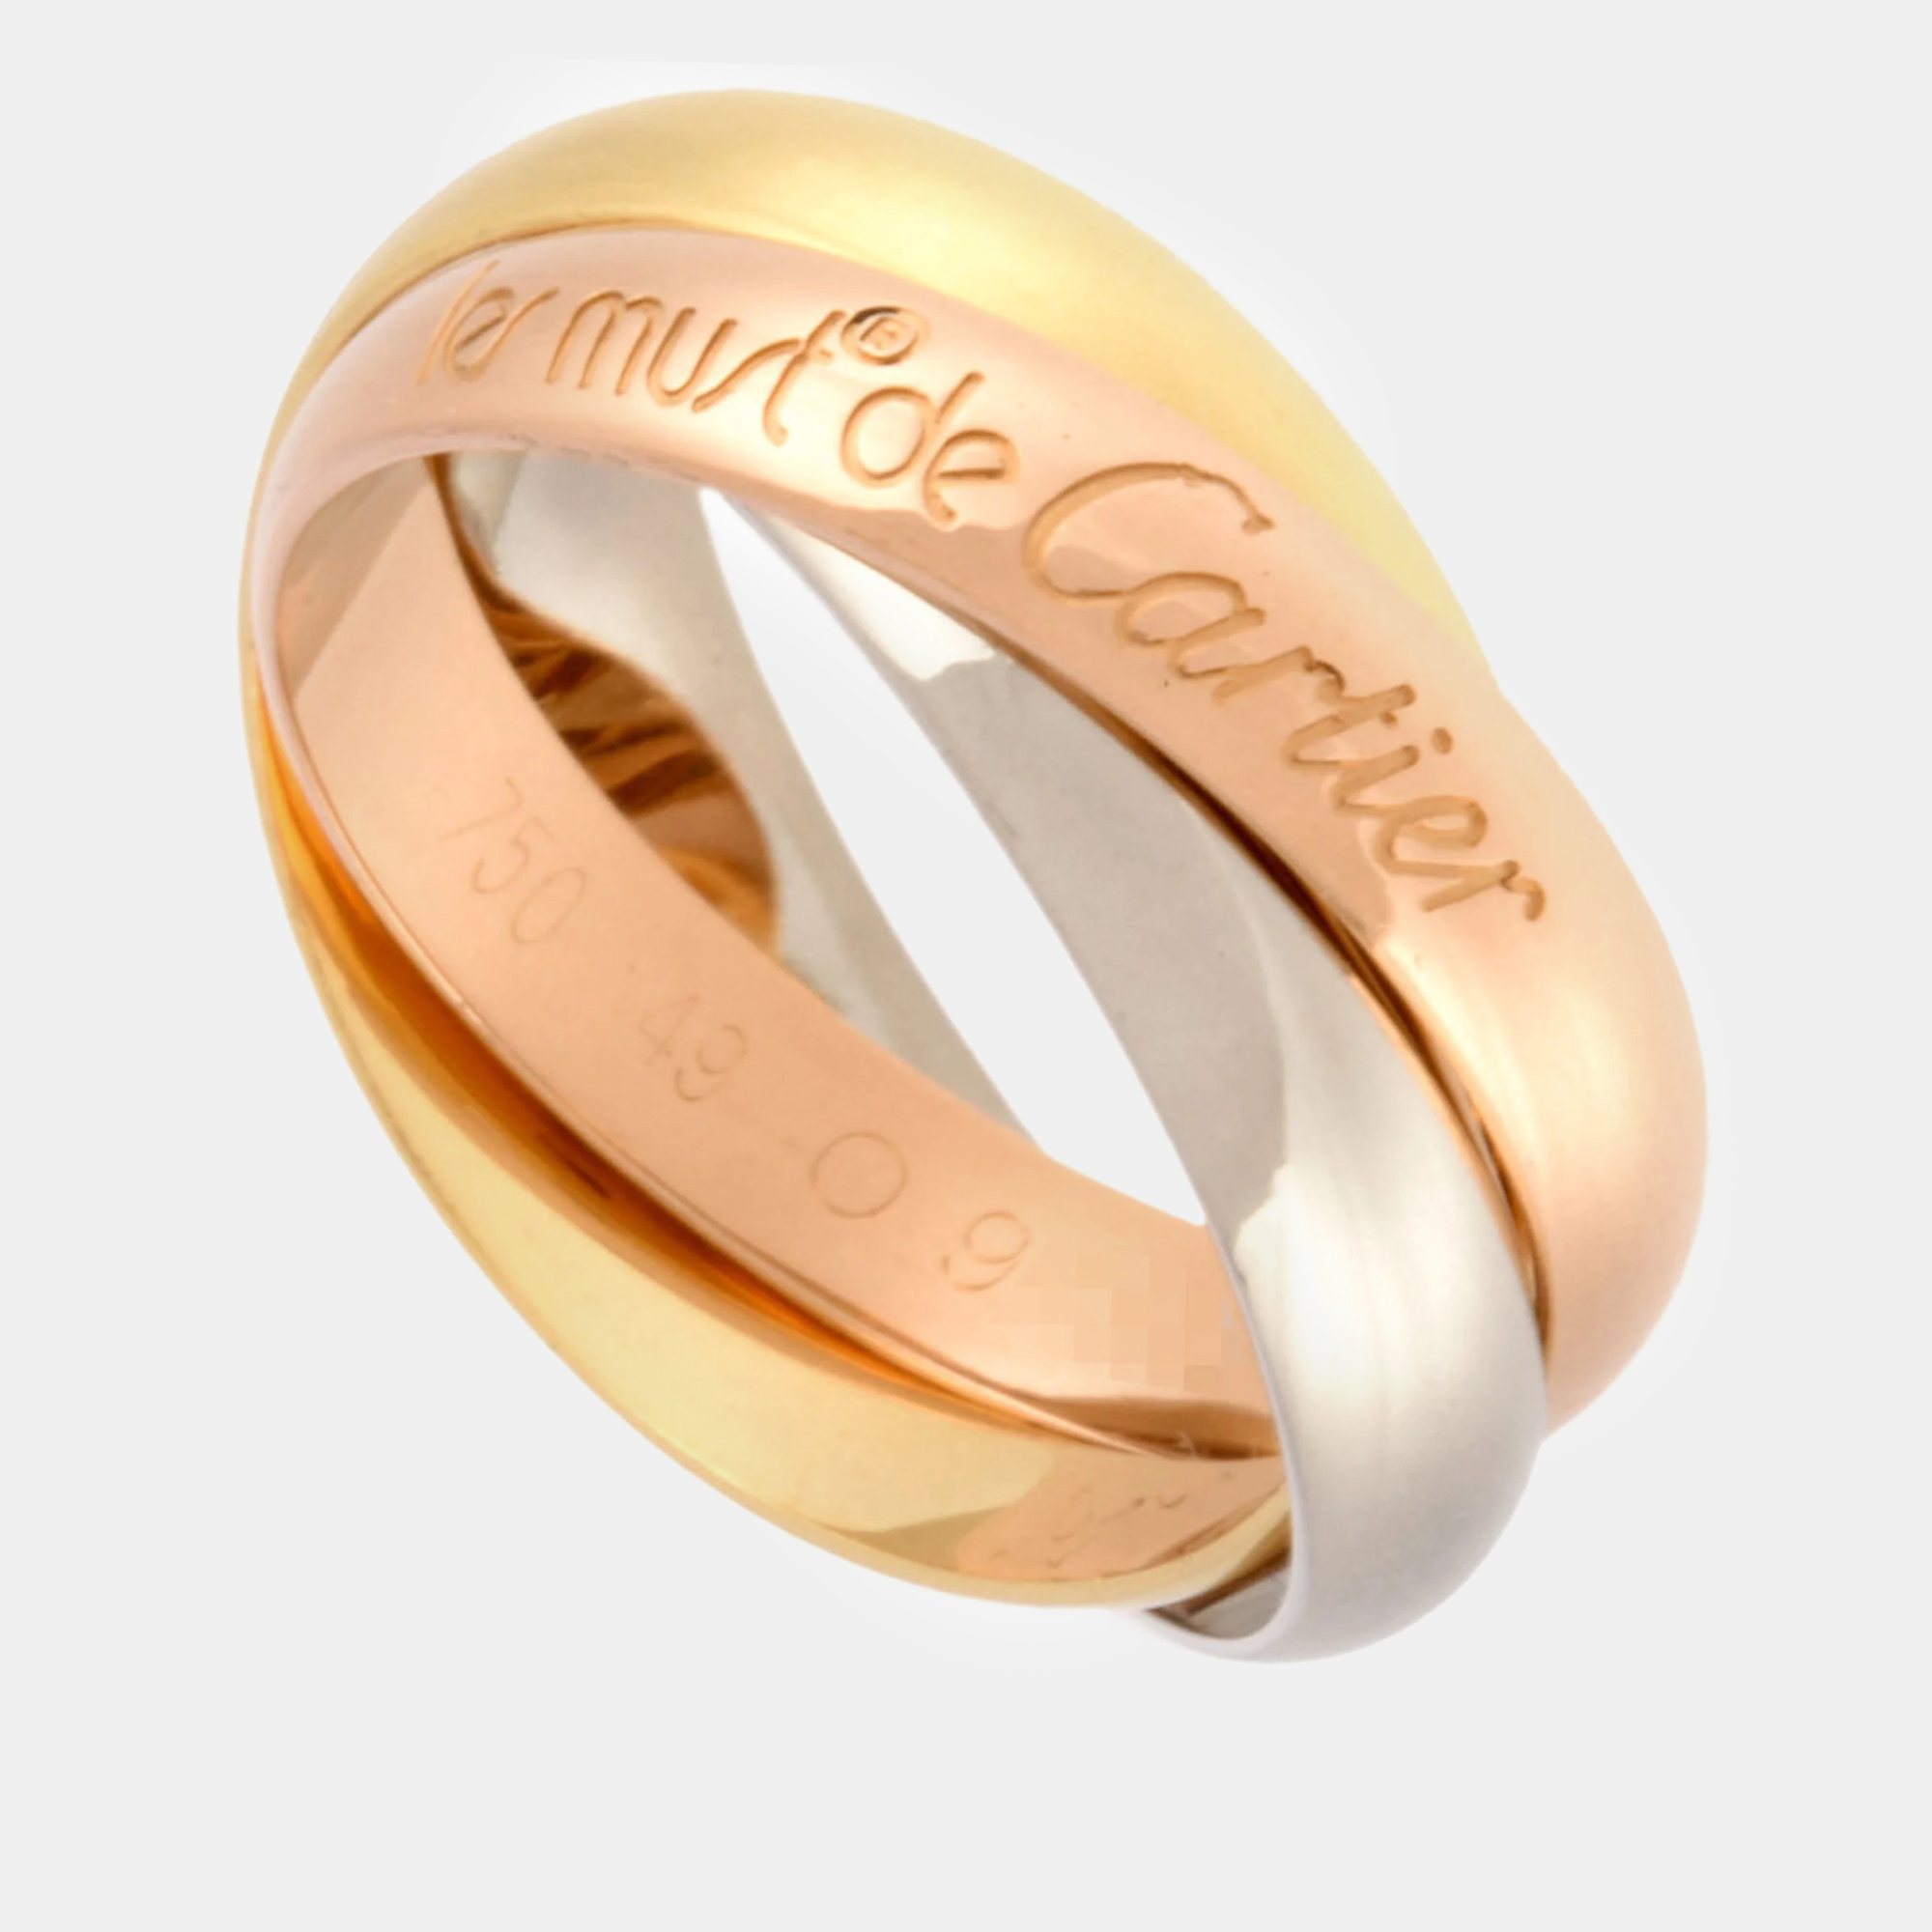 Cartier 18k yellow, rose, white gold trinity band ring eu 49